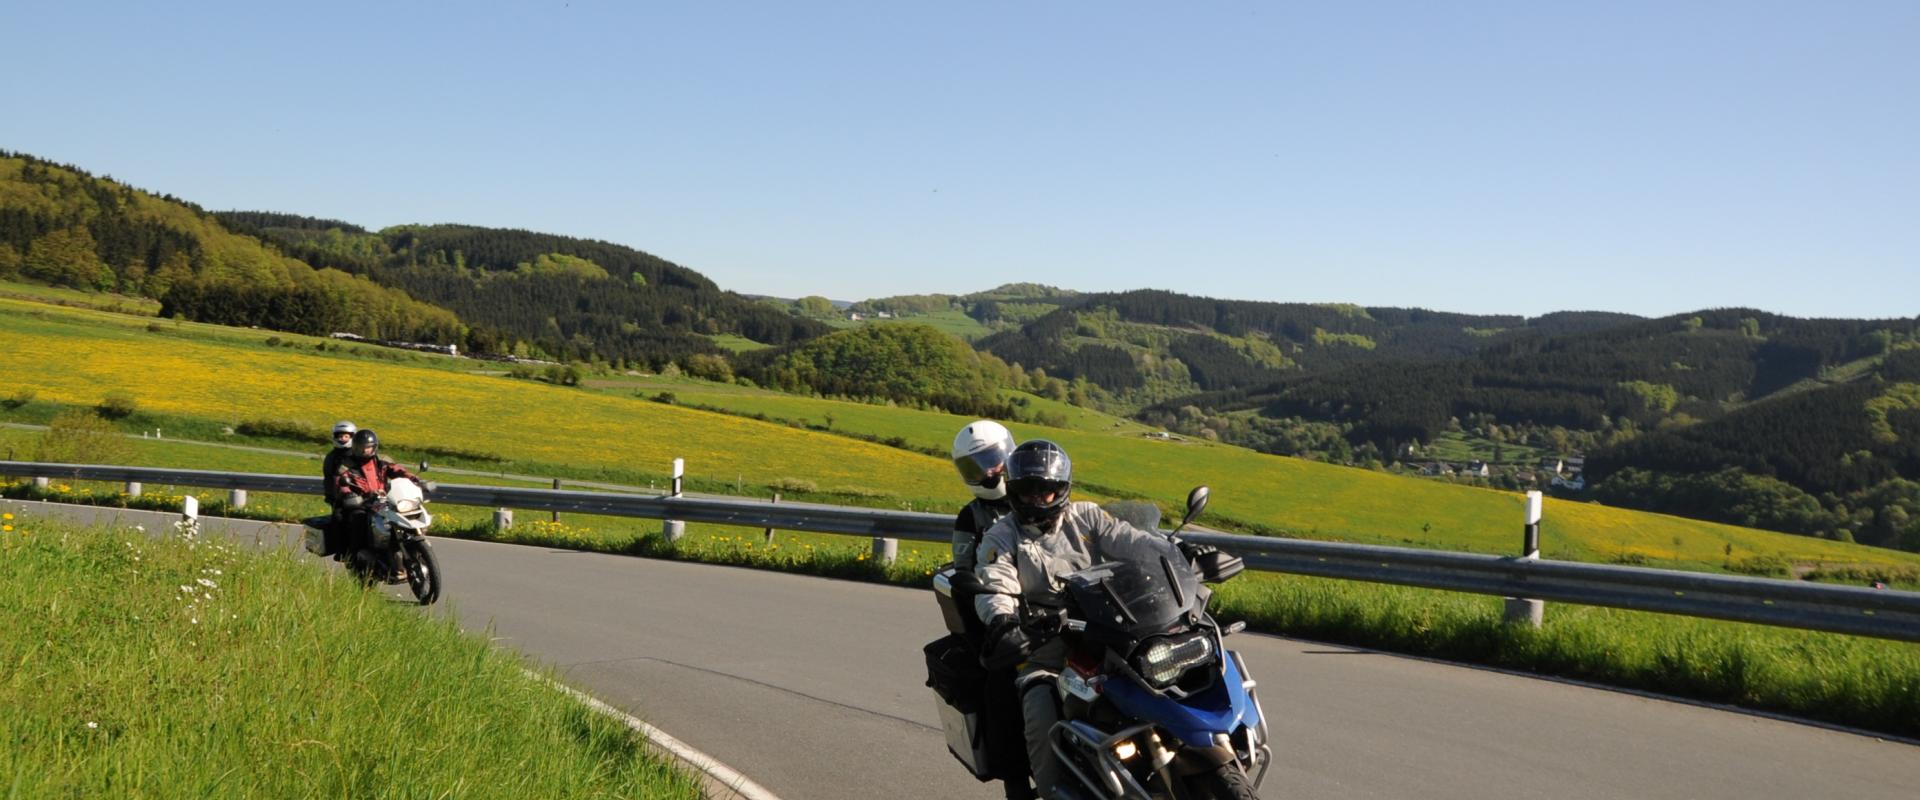 Motorradtour Allgäu.JPG